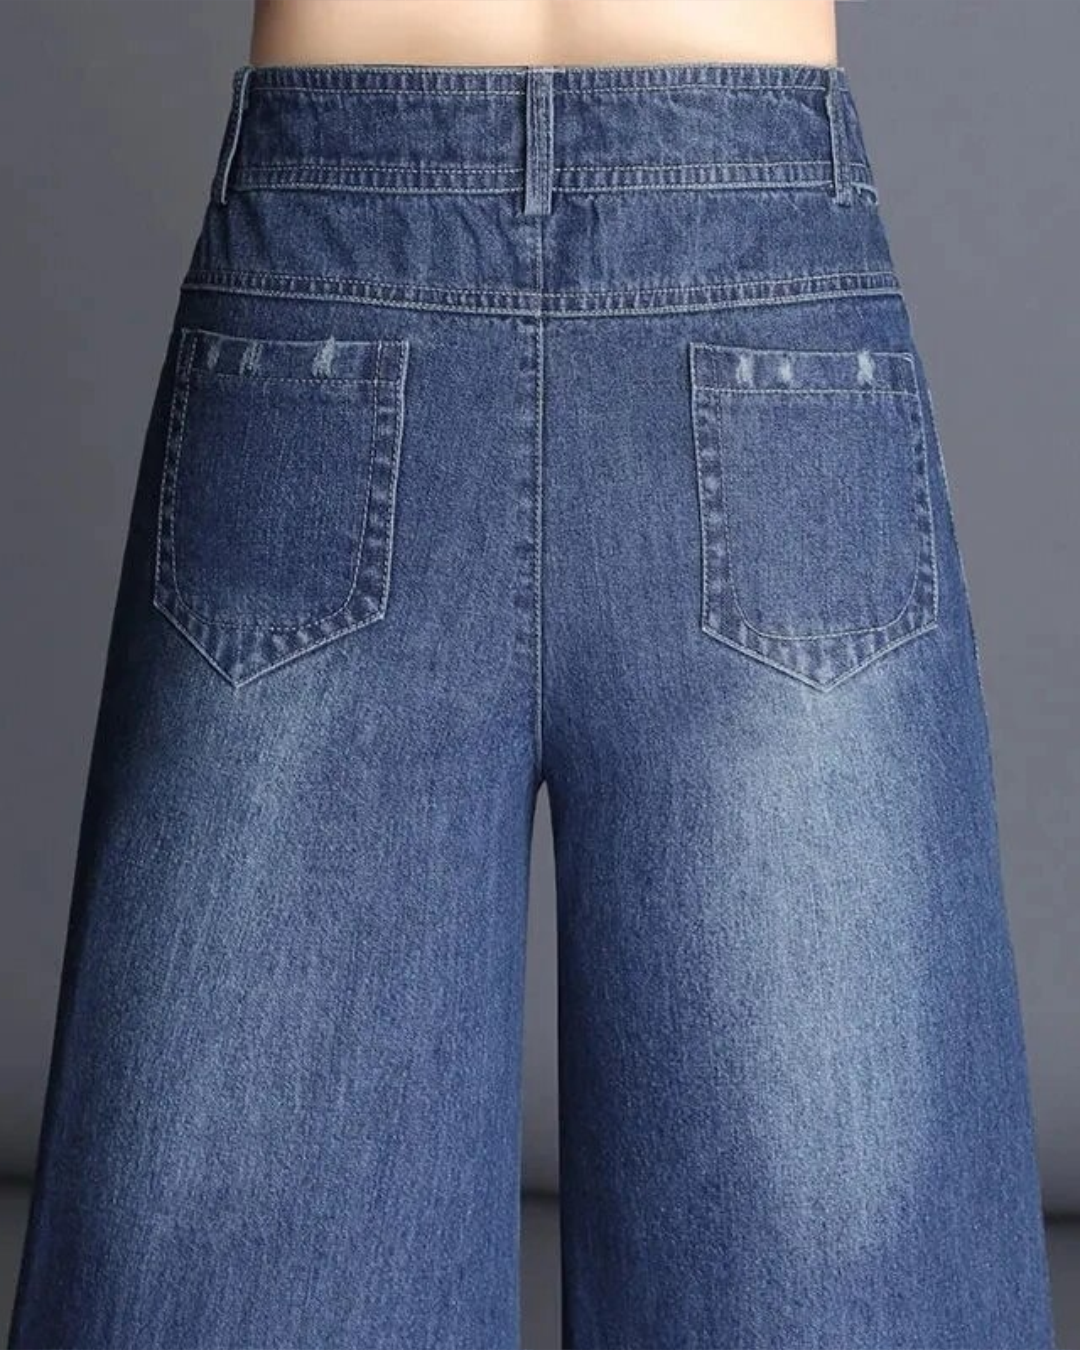 Lismali Straight High-Rise Flare Jeans